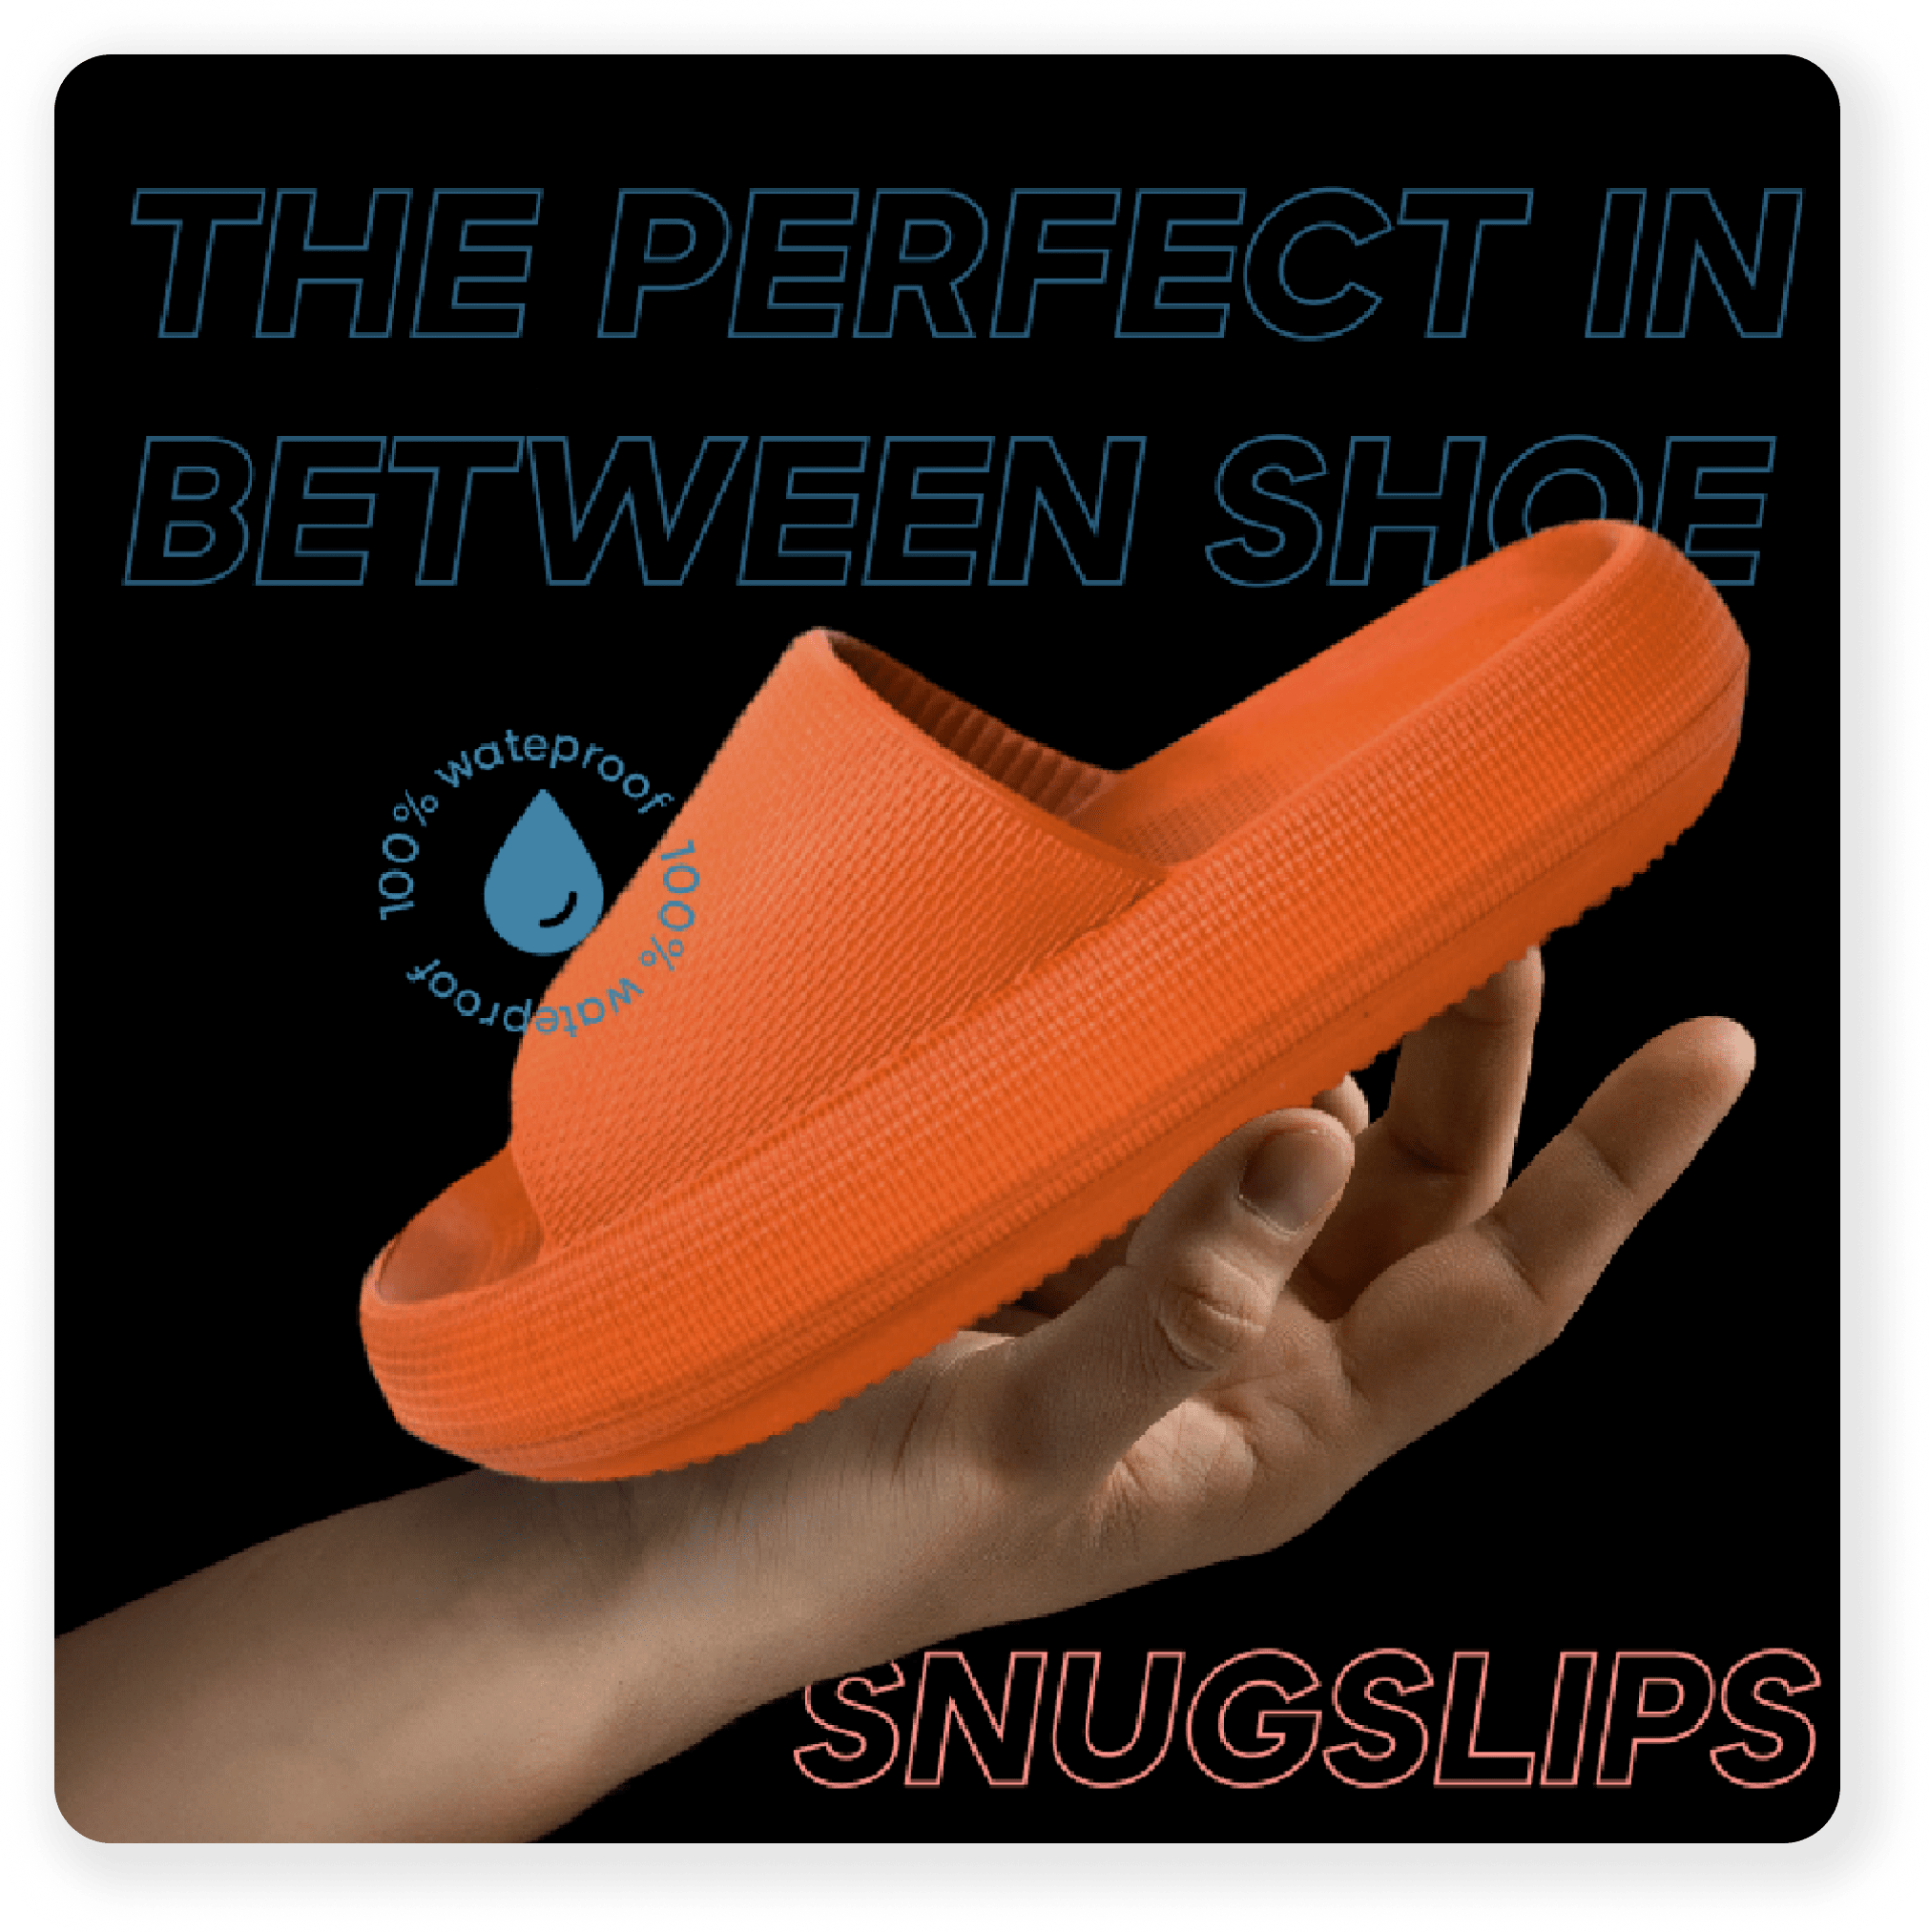 Slipper’s advertising featuring benefits of waterproof